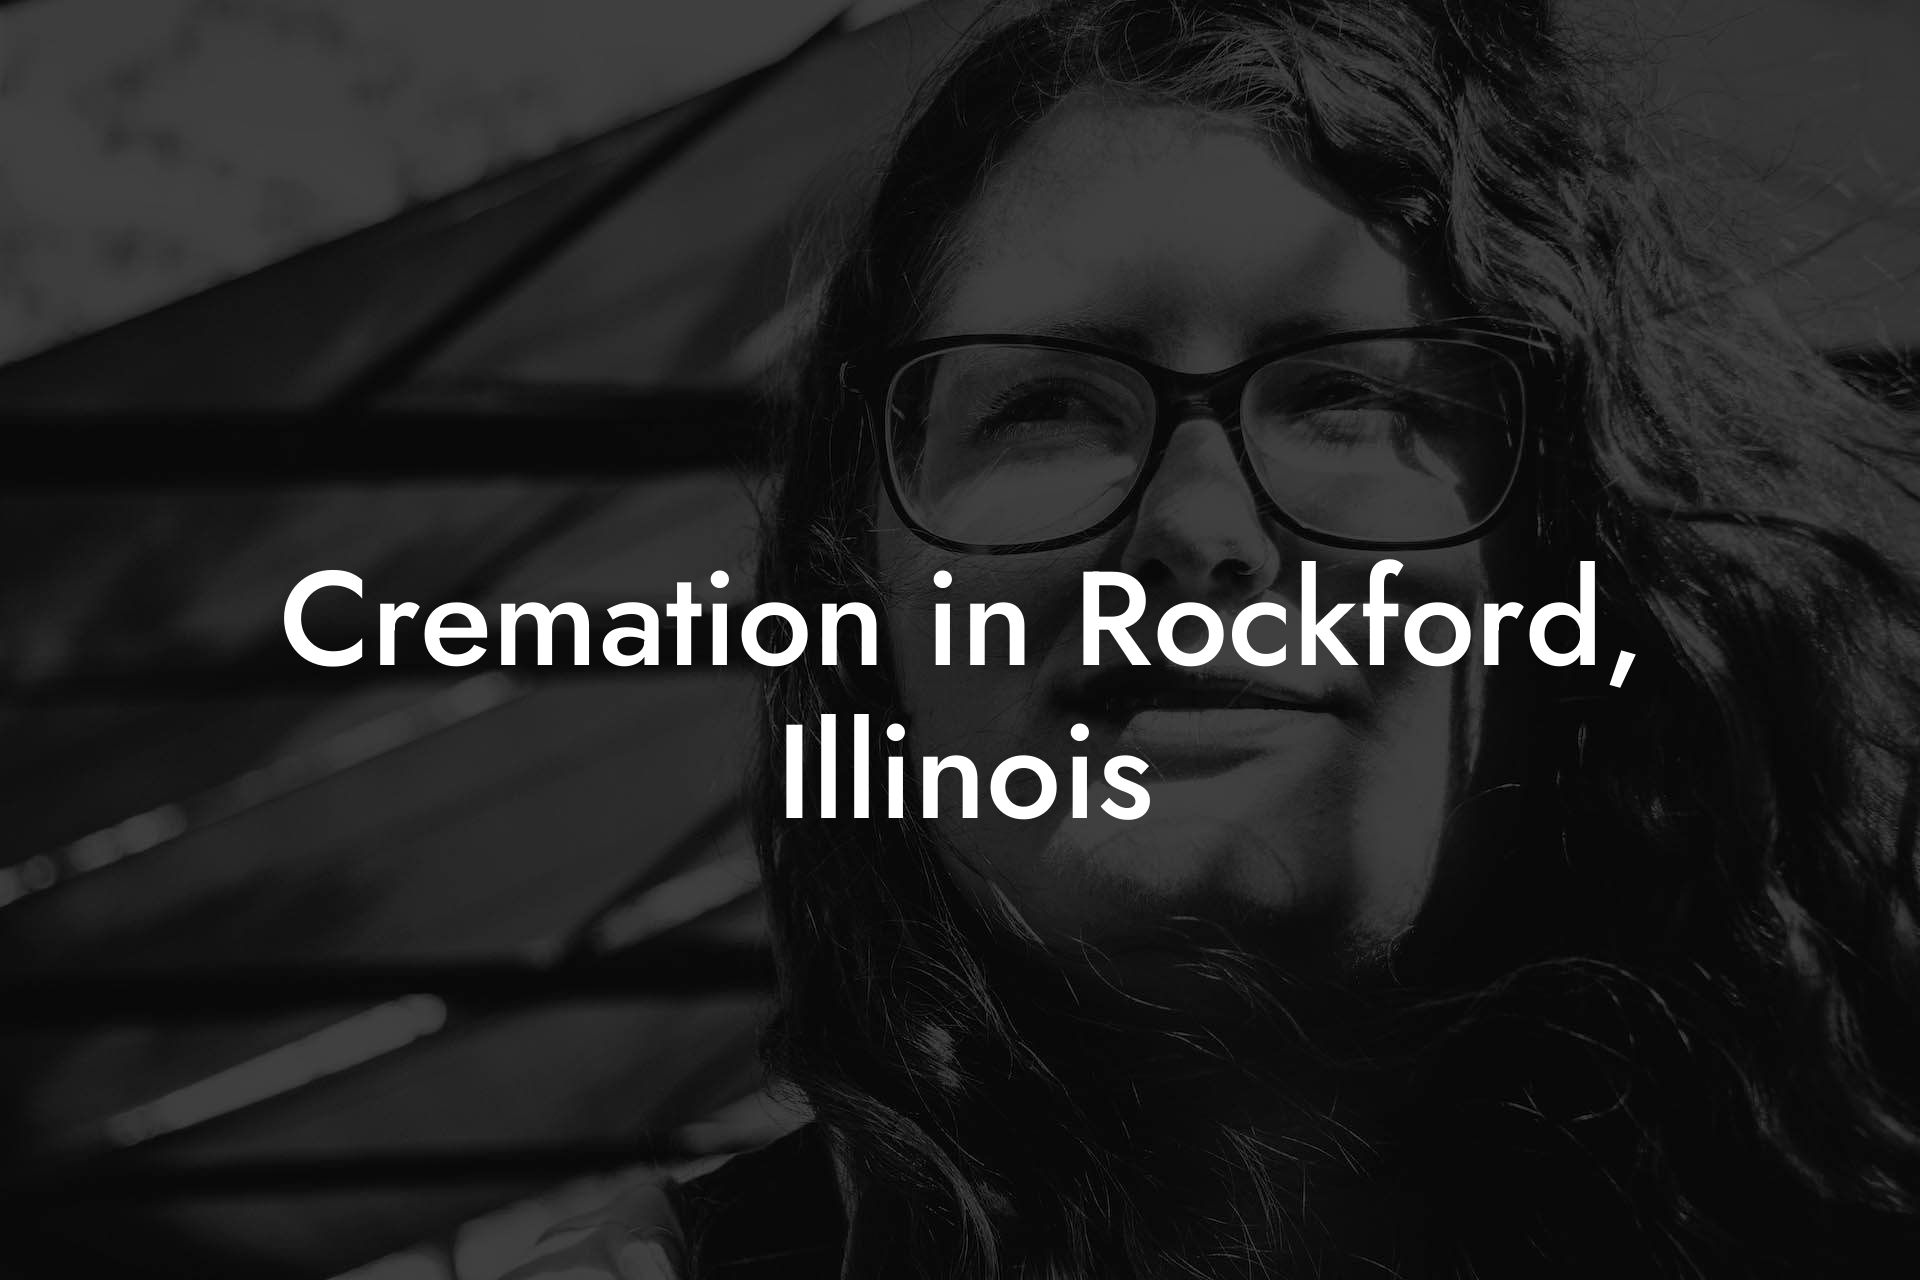 Cremation in Rockford, Illinois